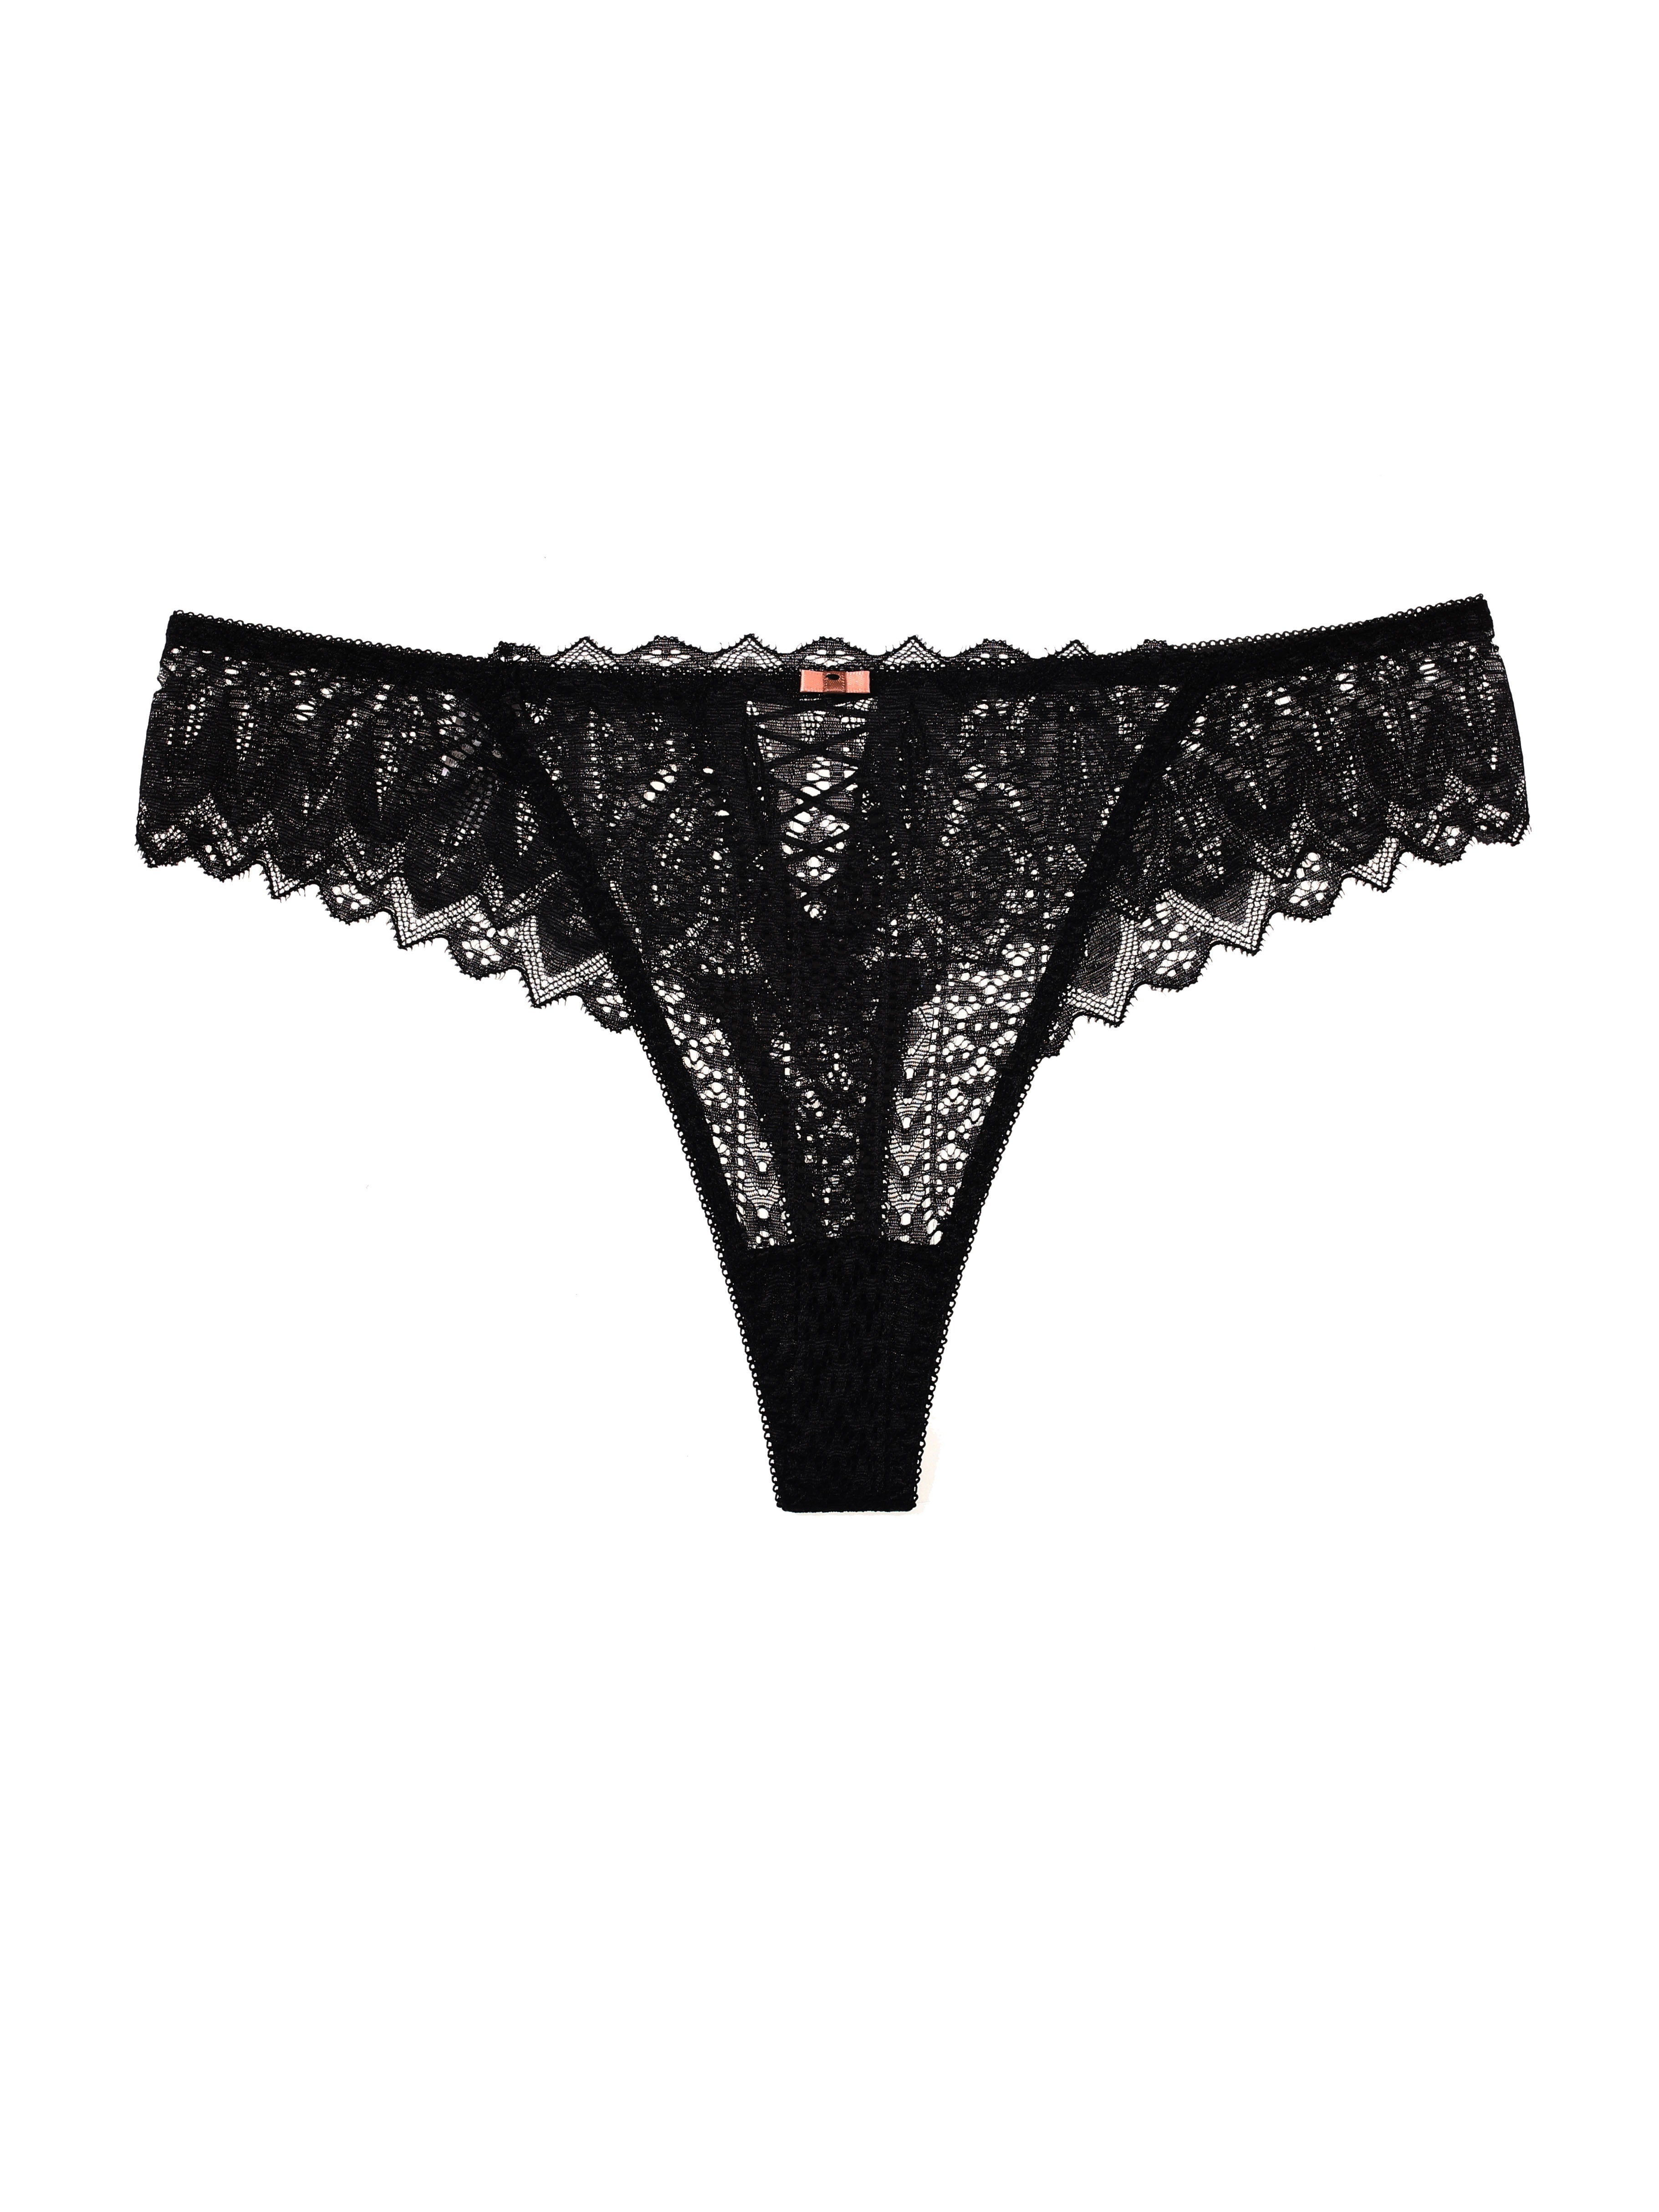 Women Sexy Lace See-through Sheer G-string Briefs Thongs Underwear Panties